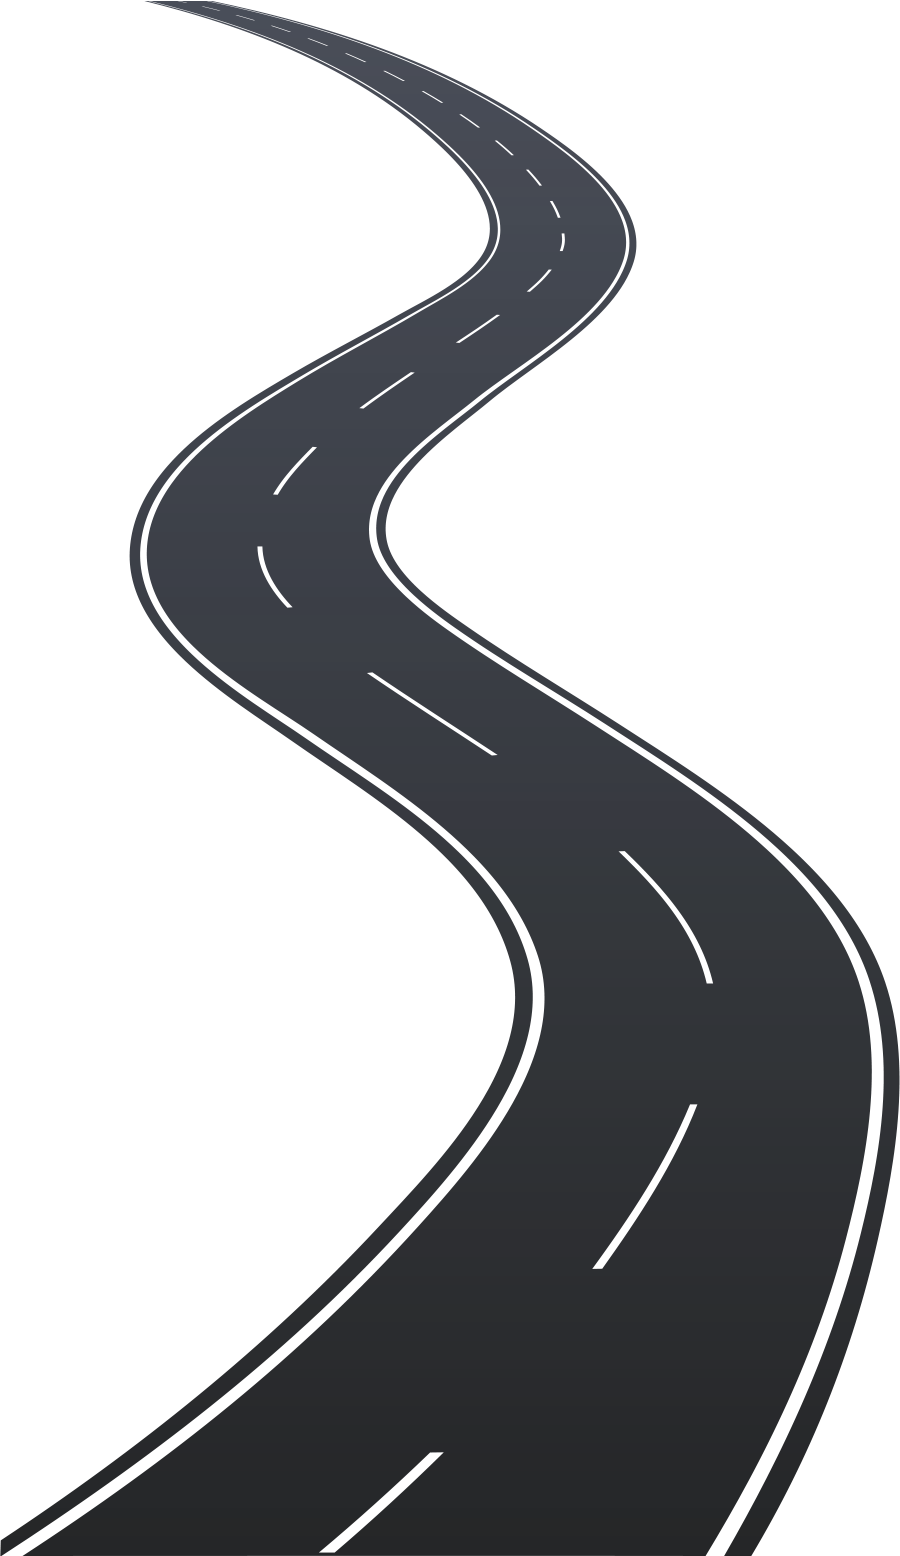 Digital Image of a curvy road